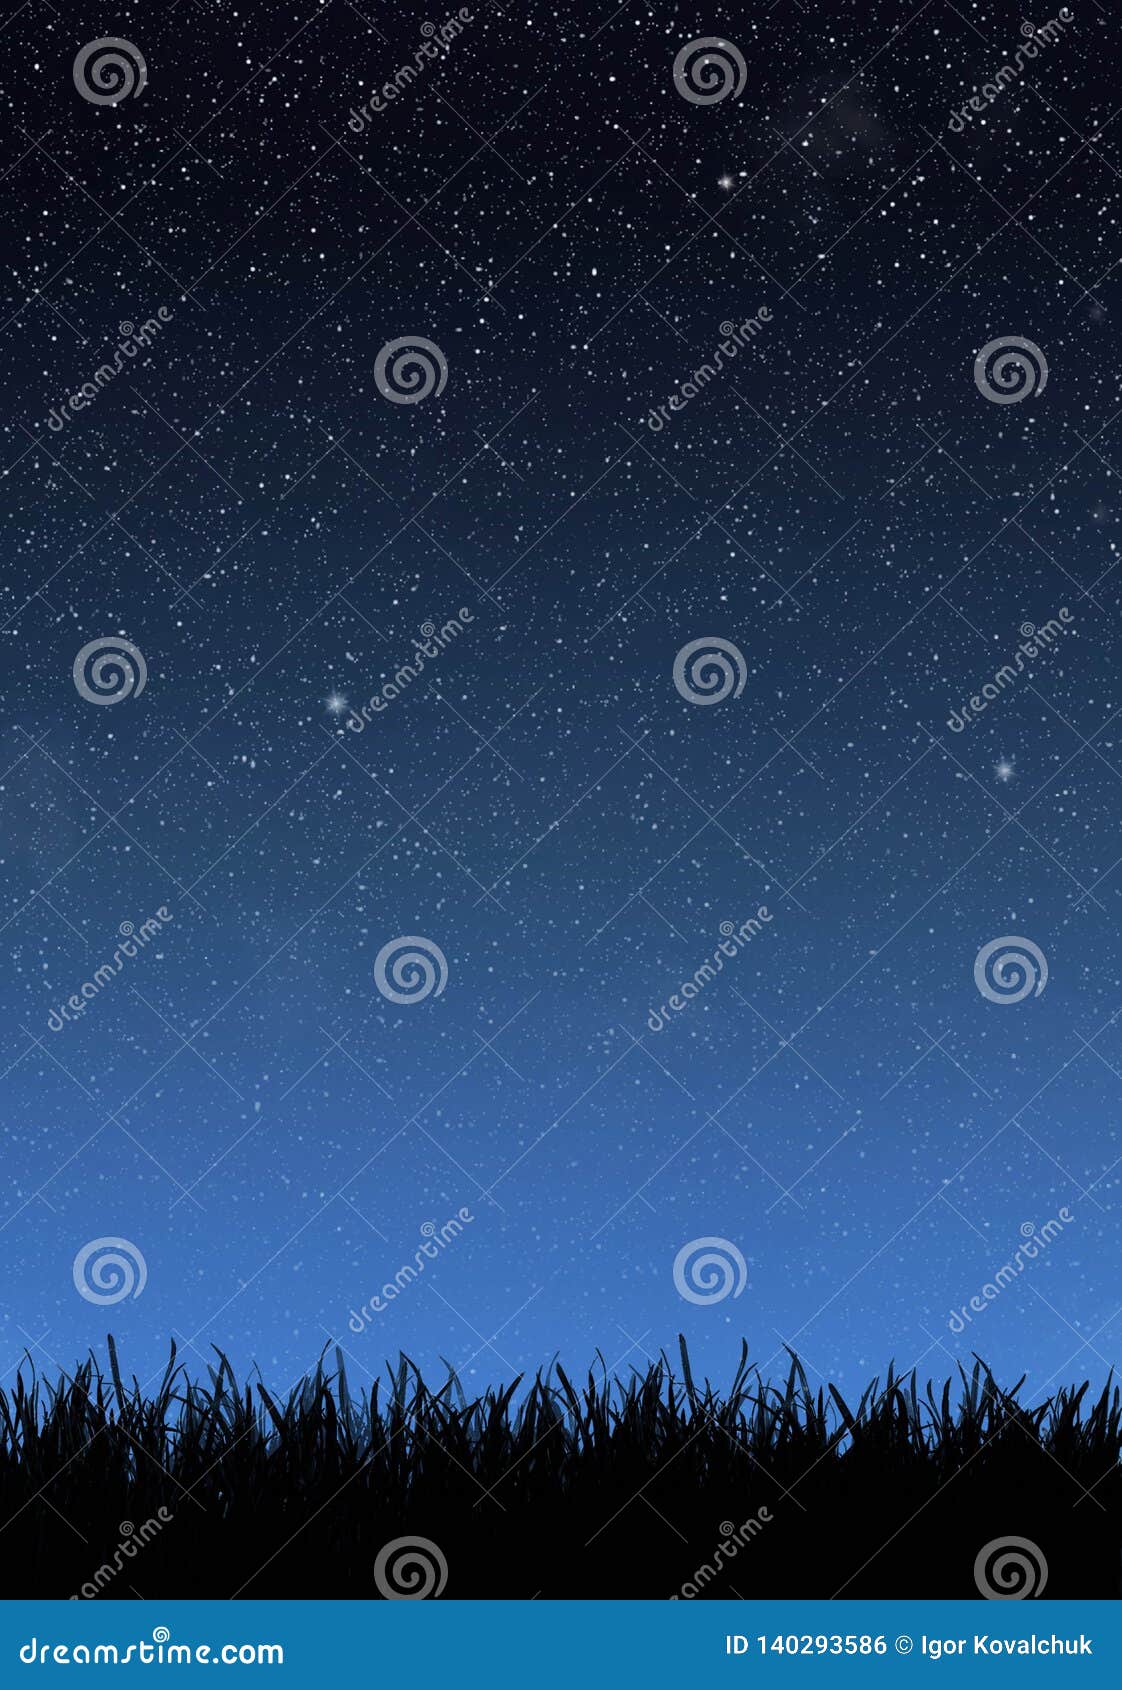 Grass under the night sky stock photo. Image of cosmic - 140293586